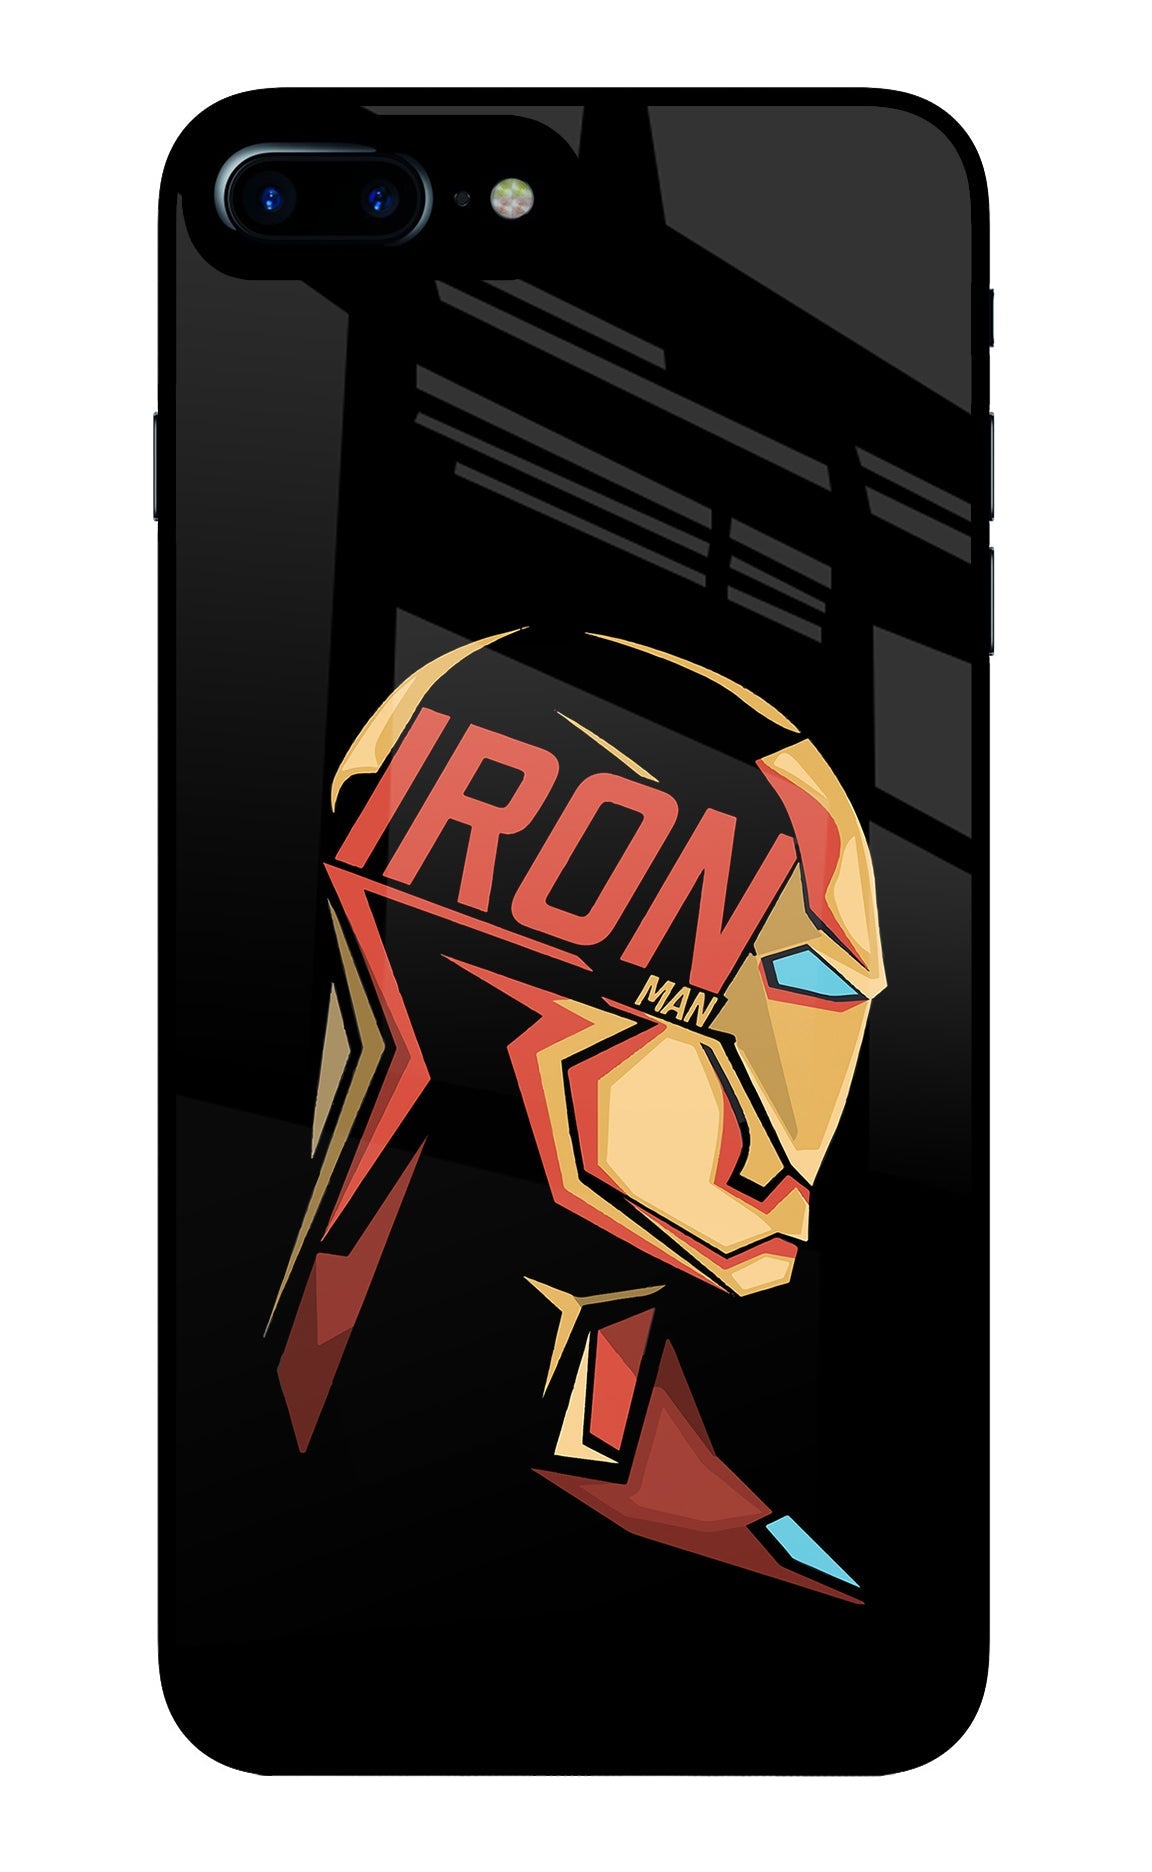 IronMan iPhone 8 Plus Glass Case